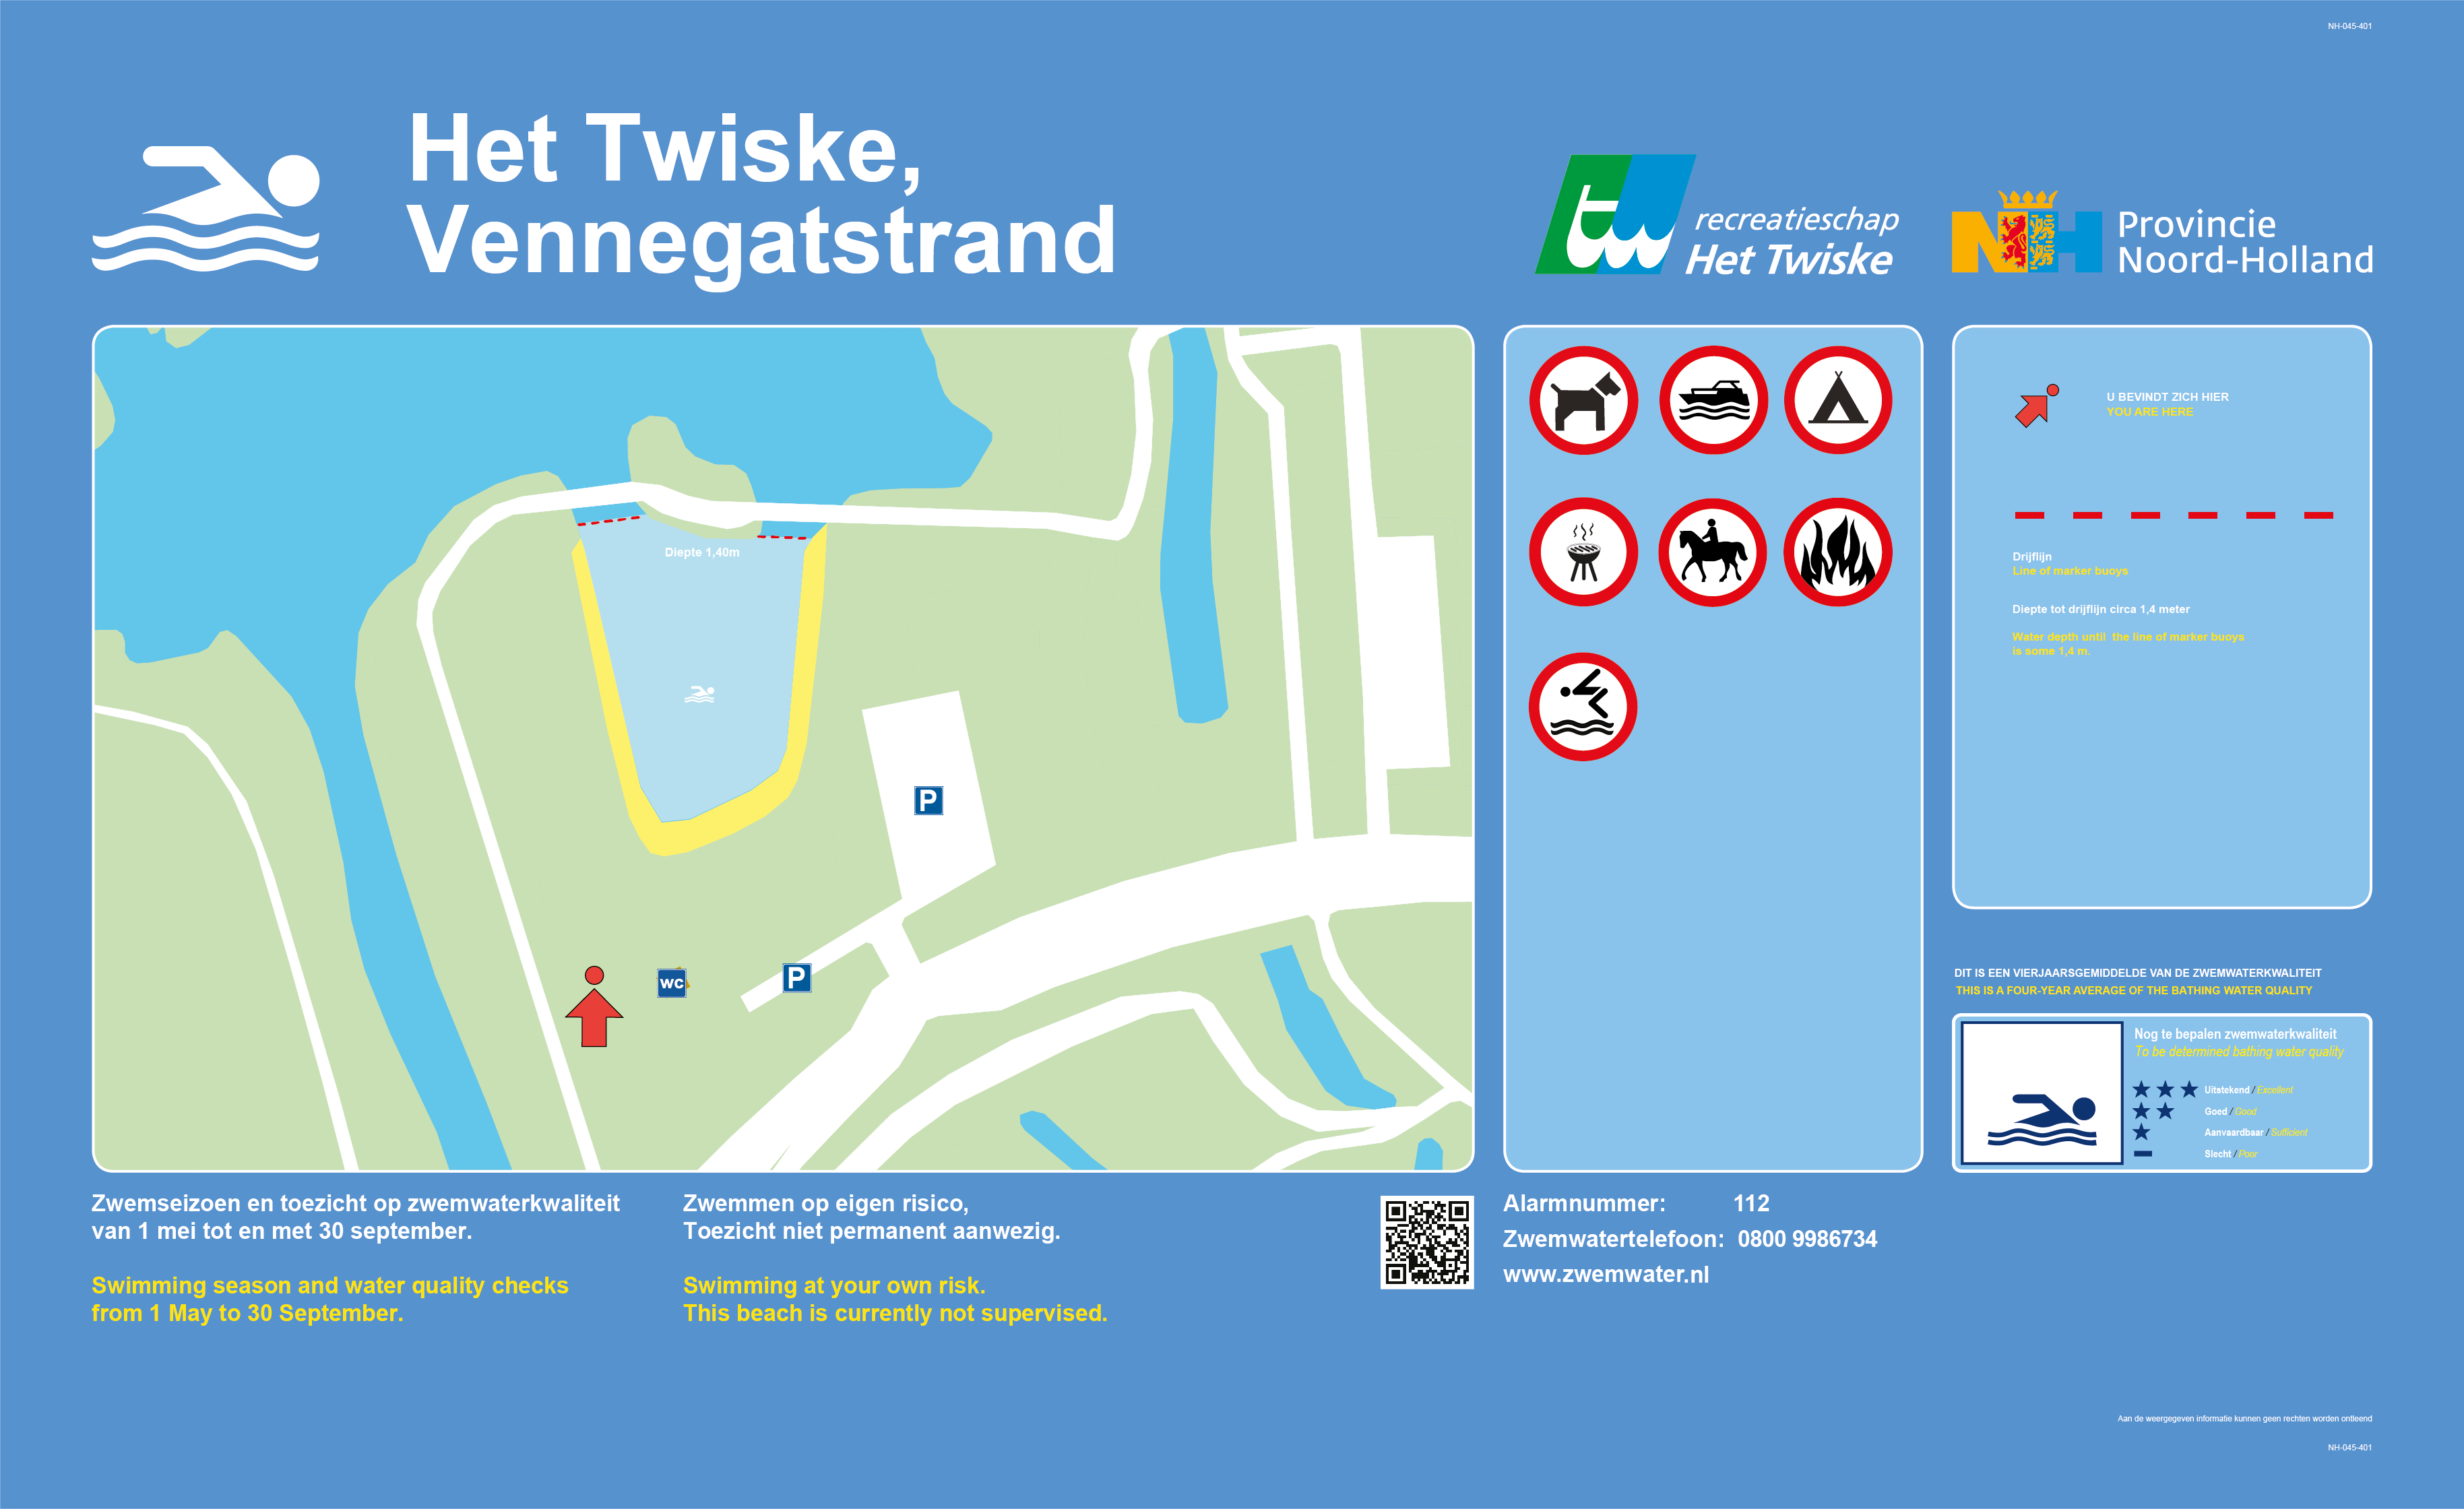 The information board at the swimming location Het Twiske; Vennegatstrand